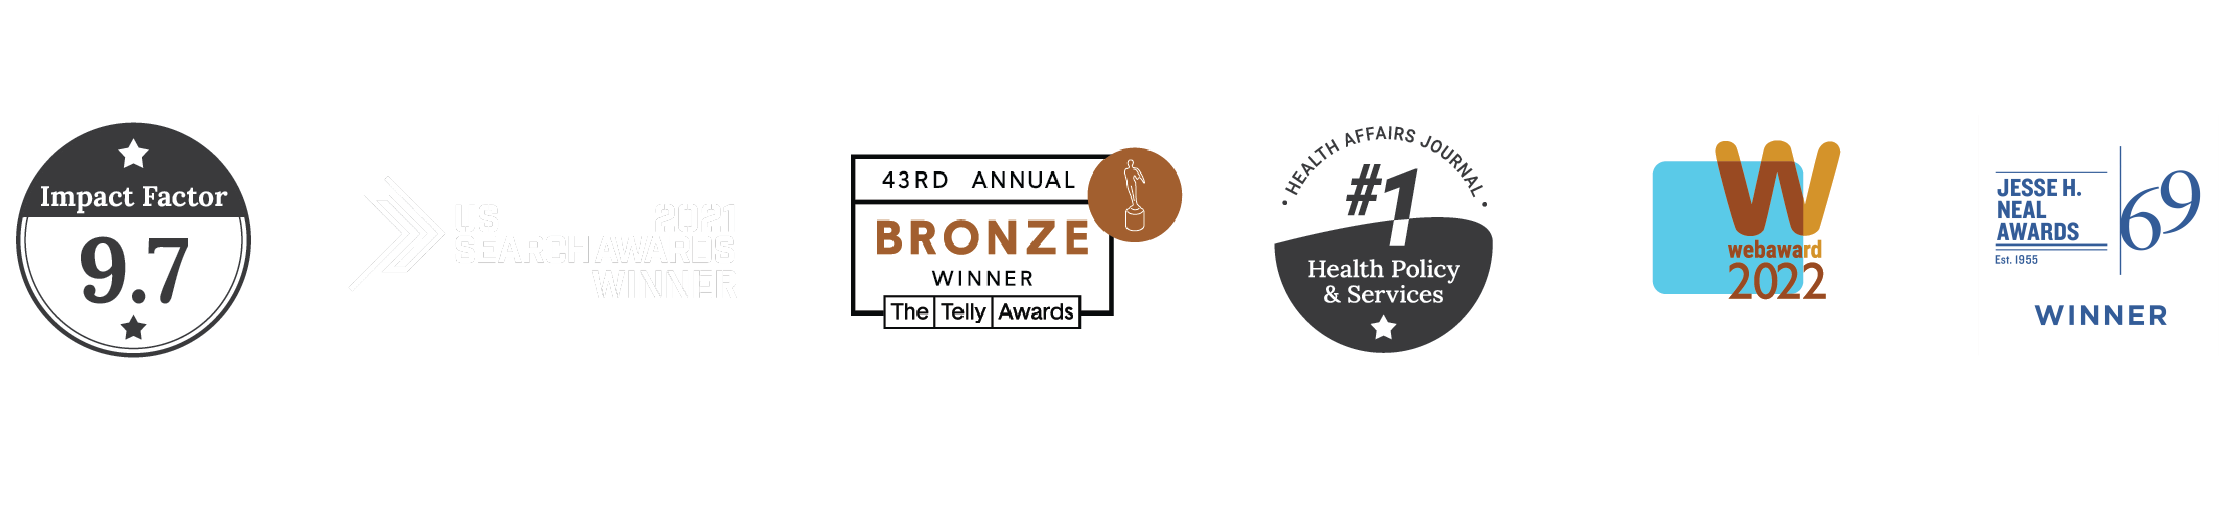 Health Affairs Award Badges